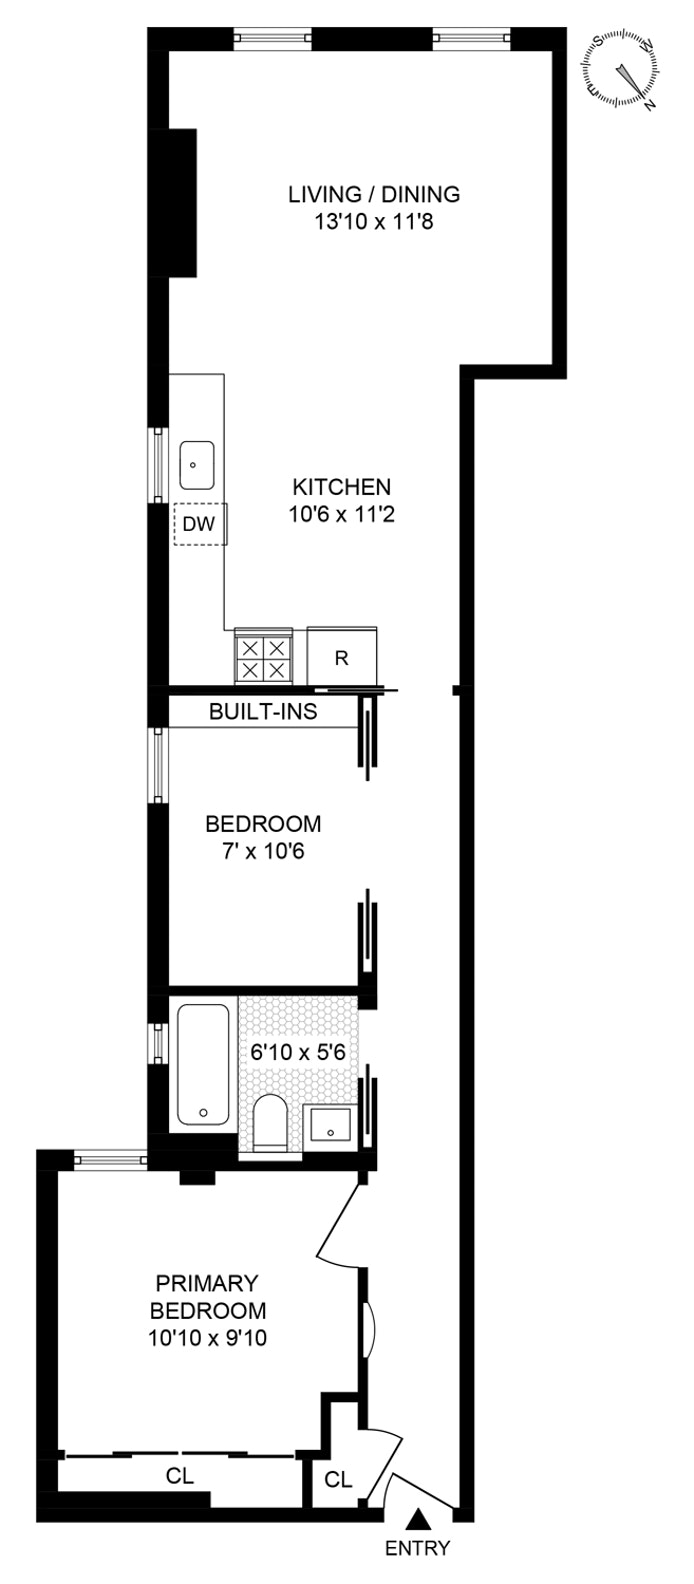 Floorplan for 231 West 21st Street, 4A